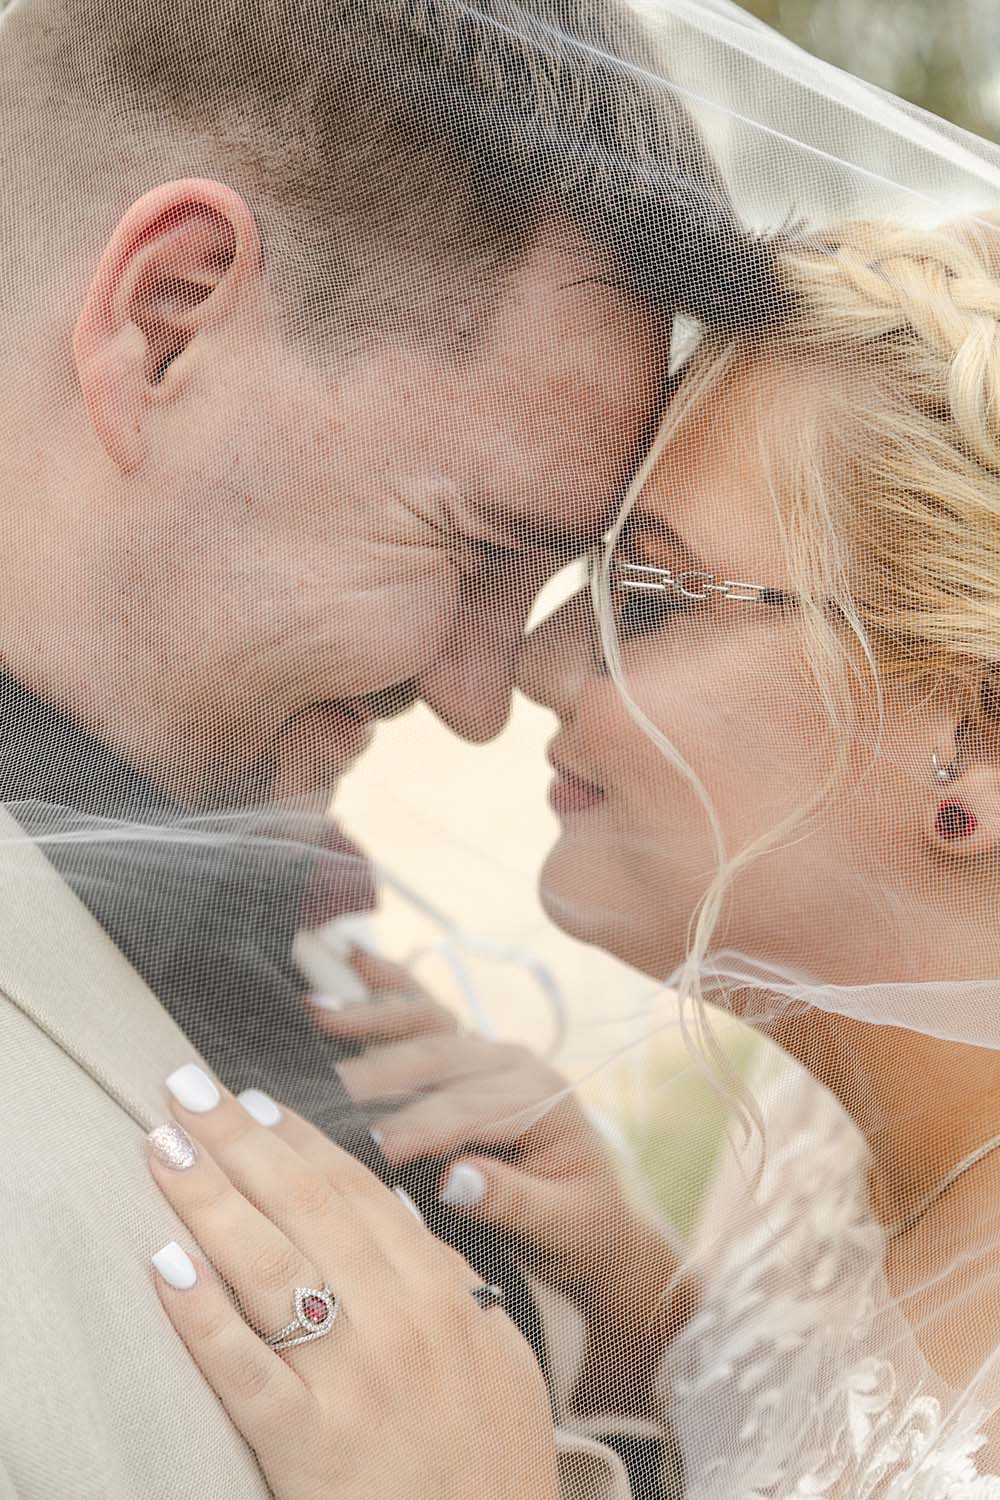 Destination Wedding Photography - Couple embracing under veil